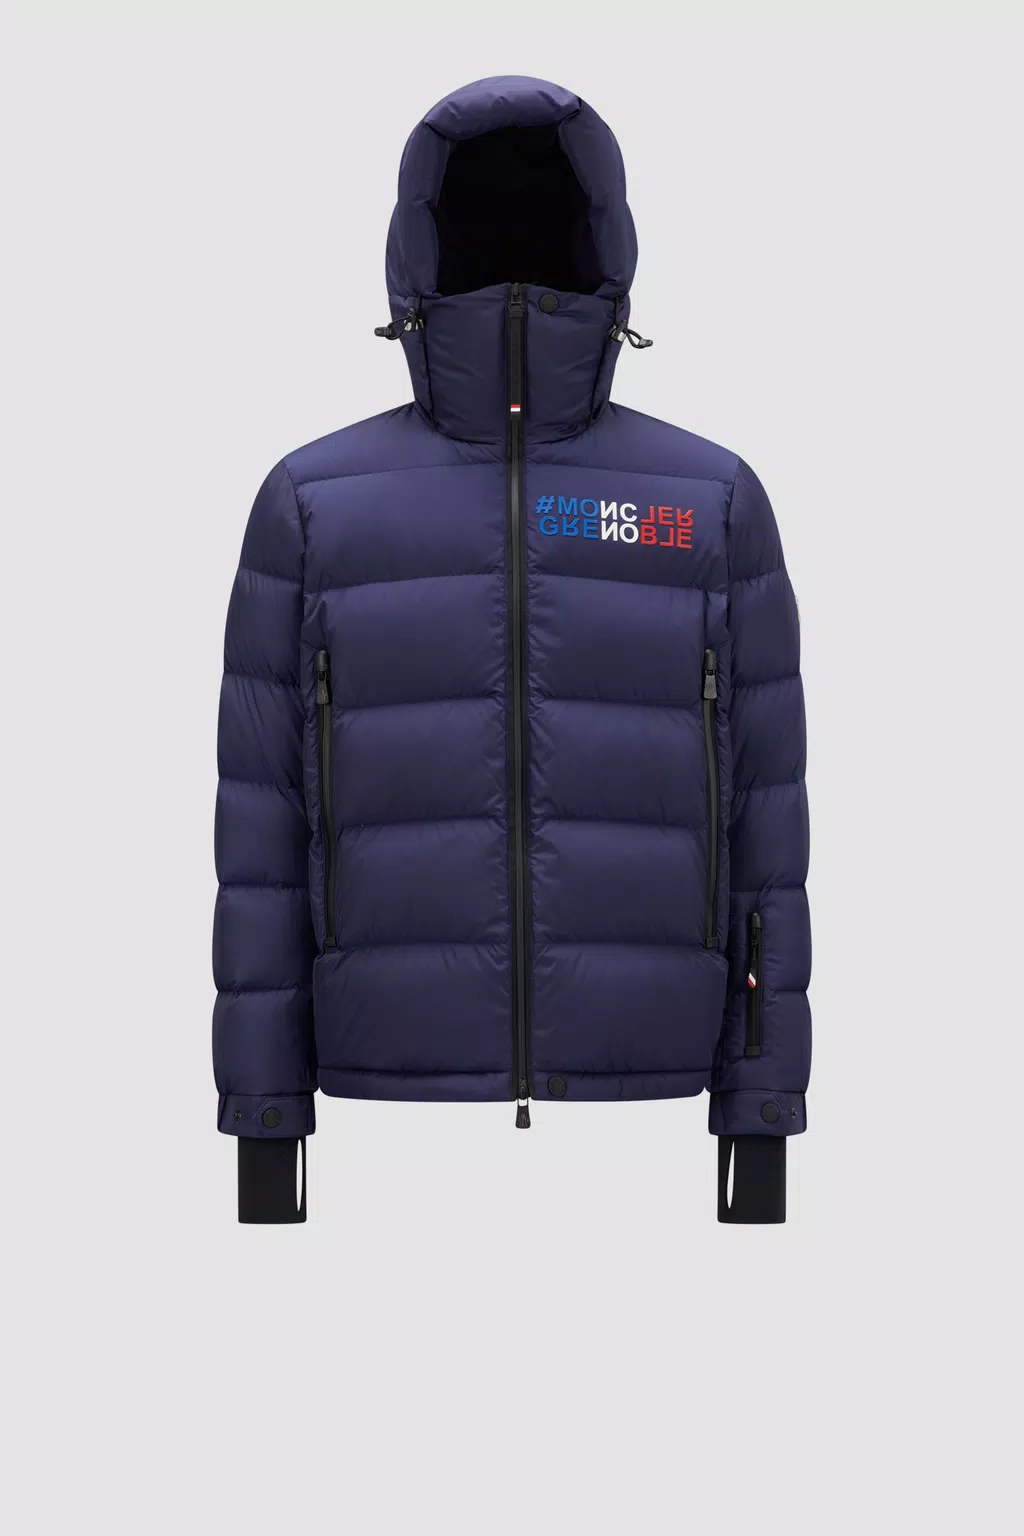 Ski Jackets for Men - Grenoble | Moncler US